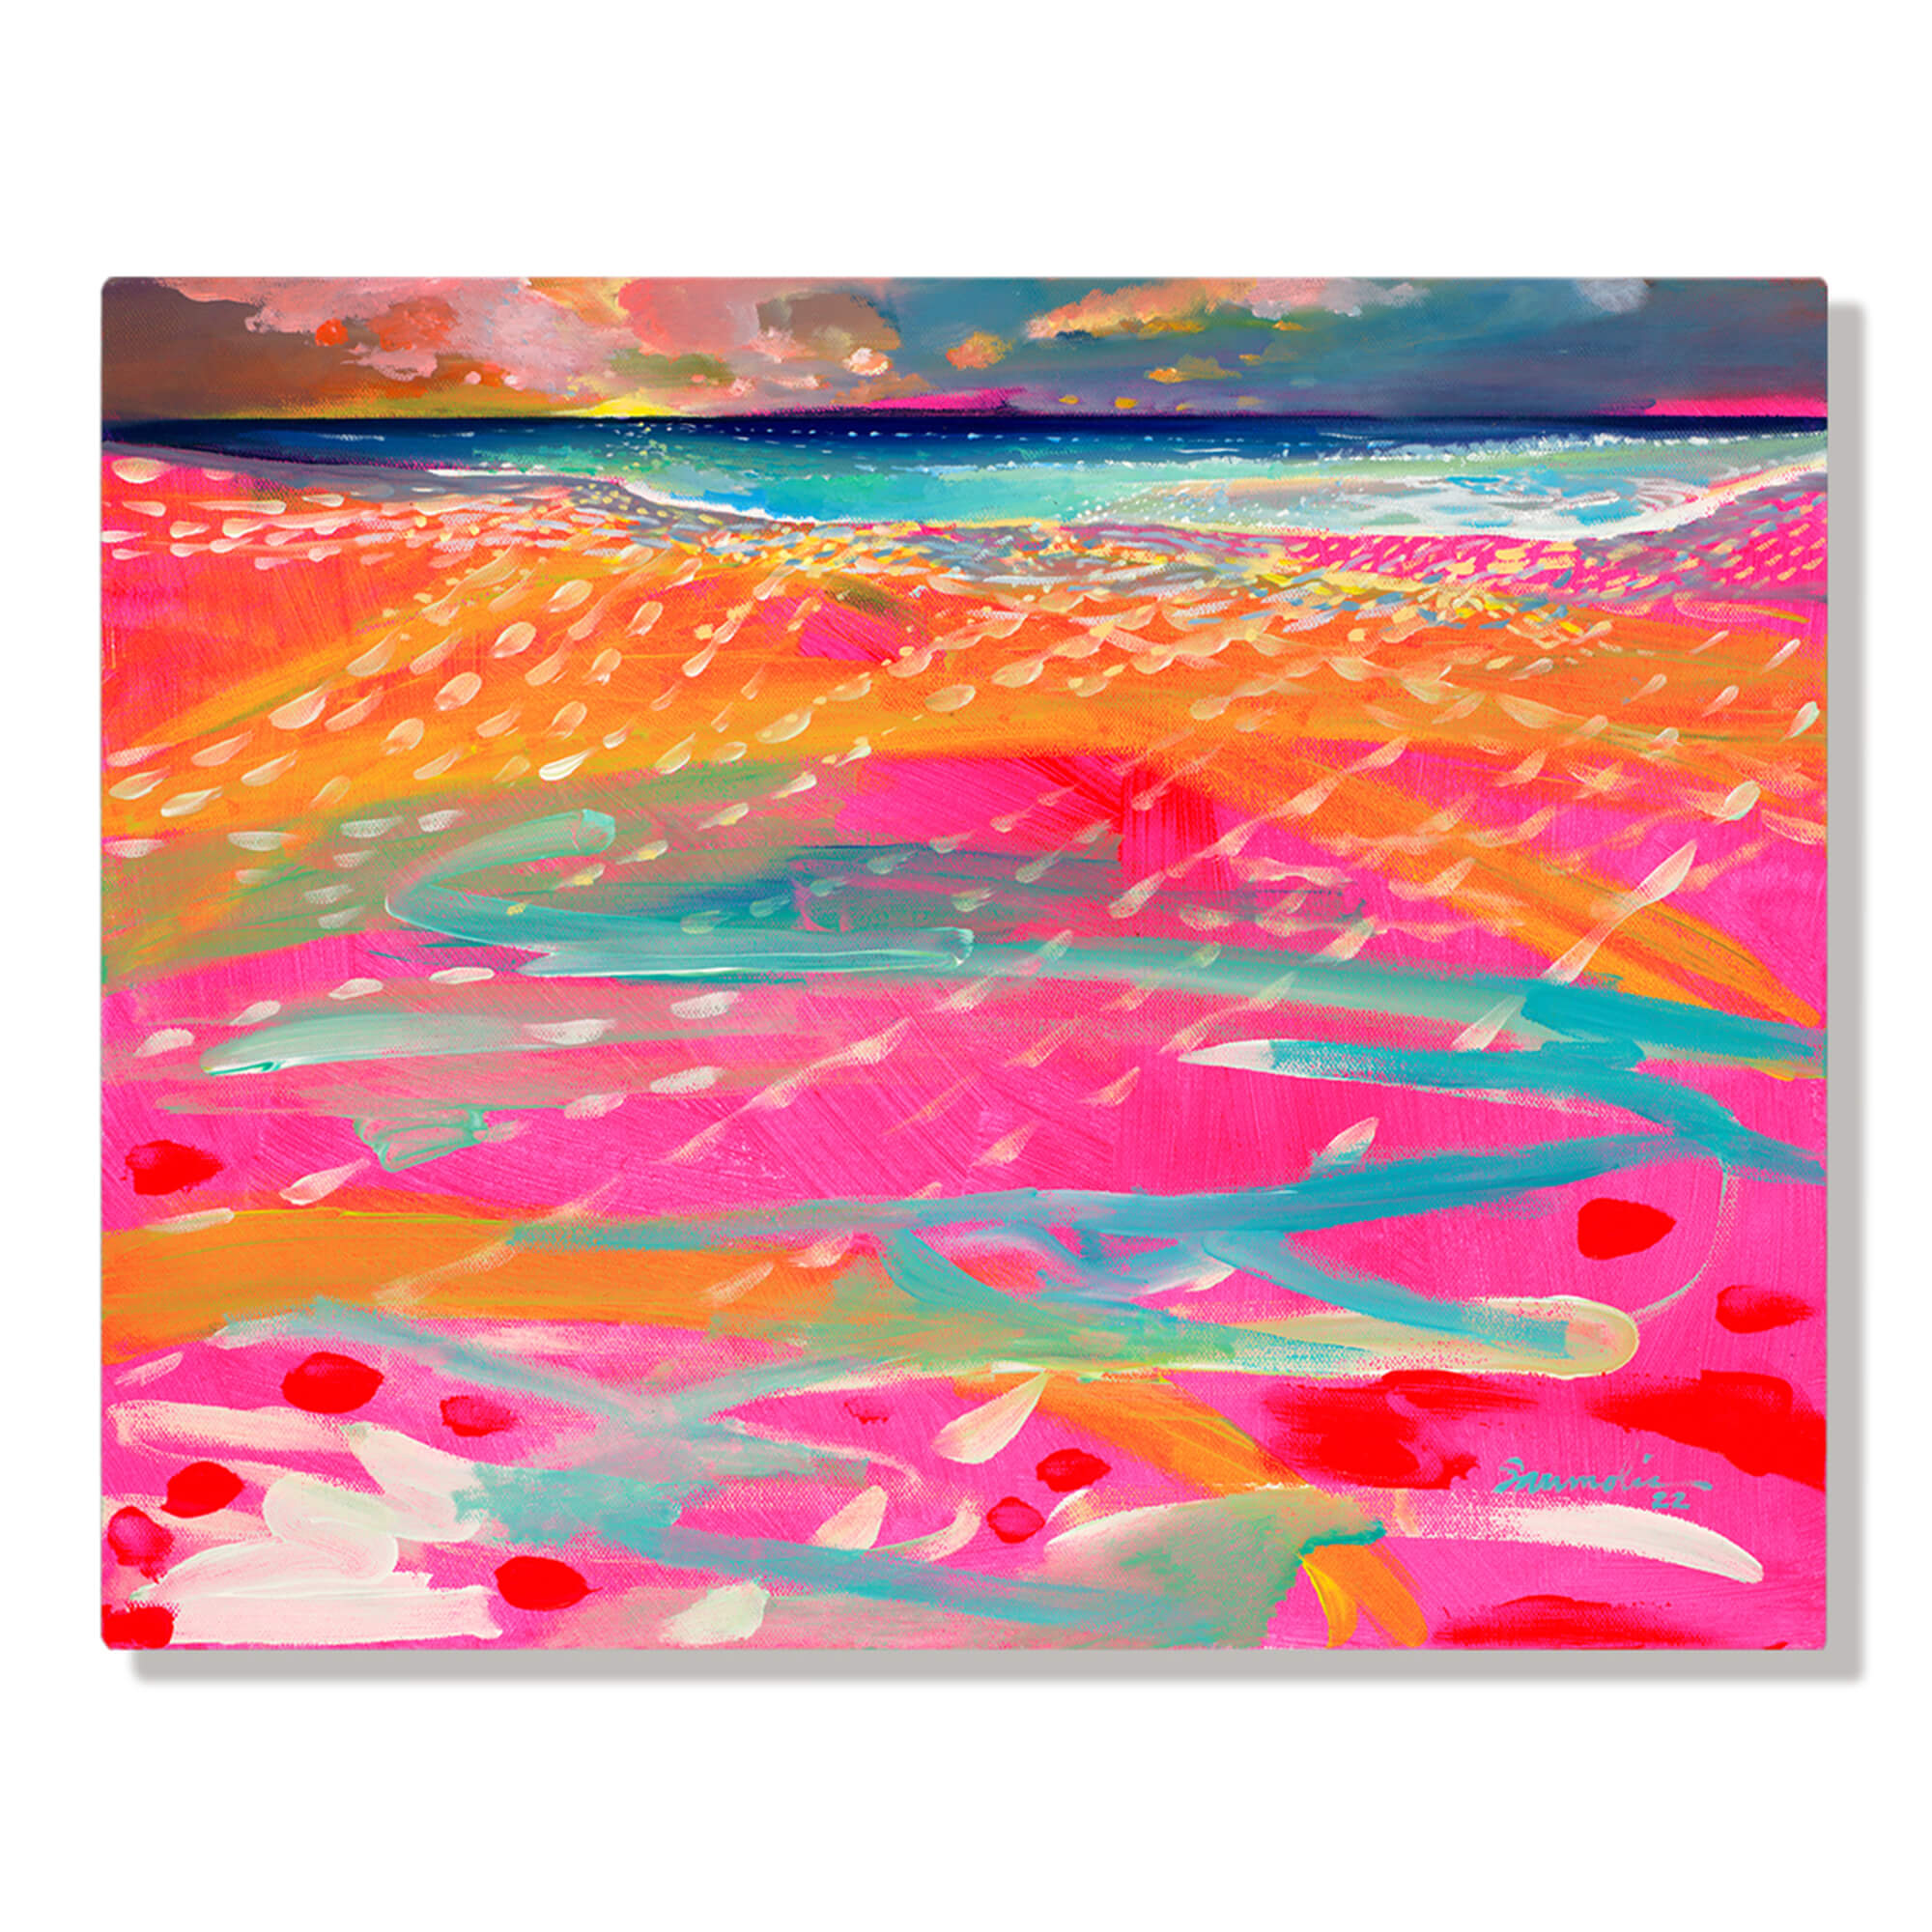 Metal aluminum print featuring this beautiful vibrant neon-colored seascape by popular Hawaii artist Saumolia Puapuaga